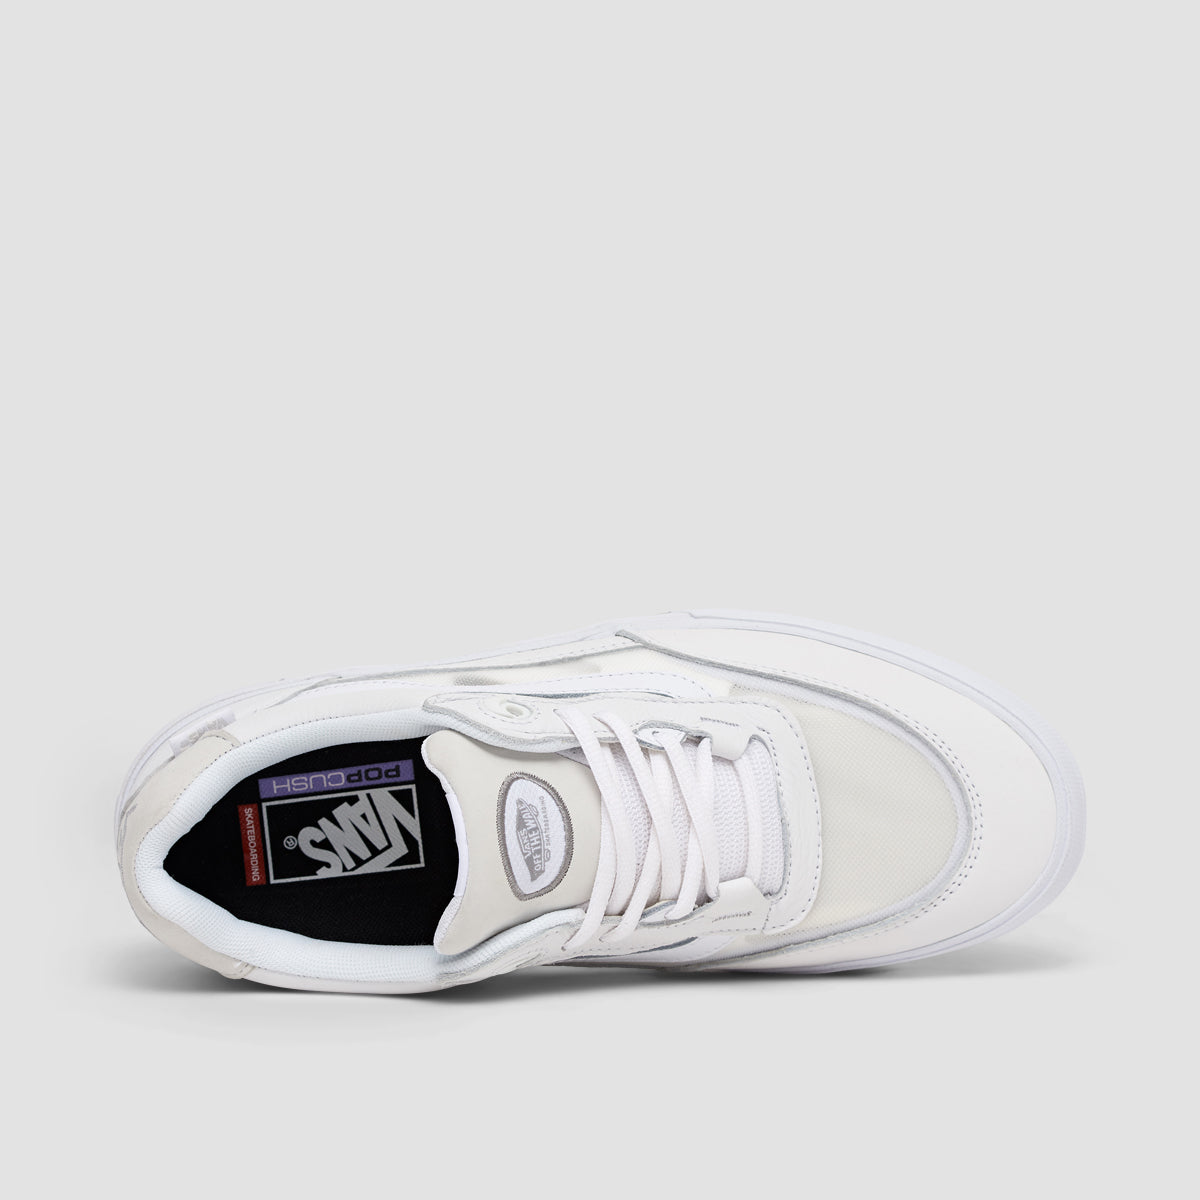 Vans Wayvee Shoes - White/White